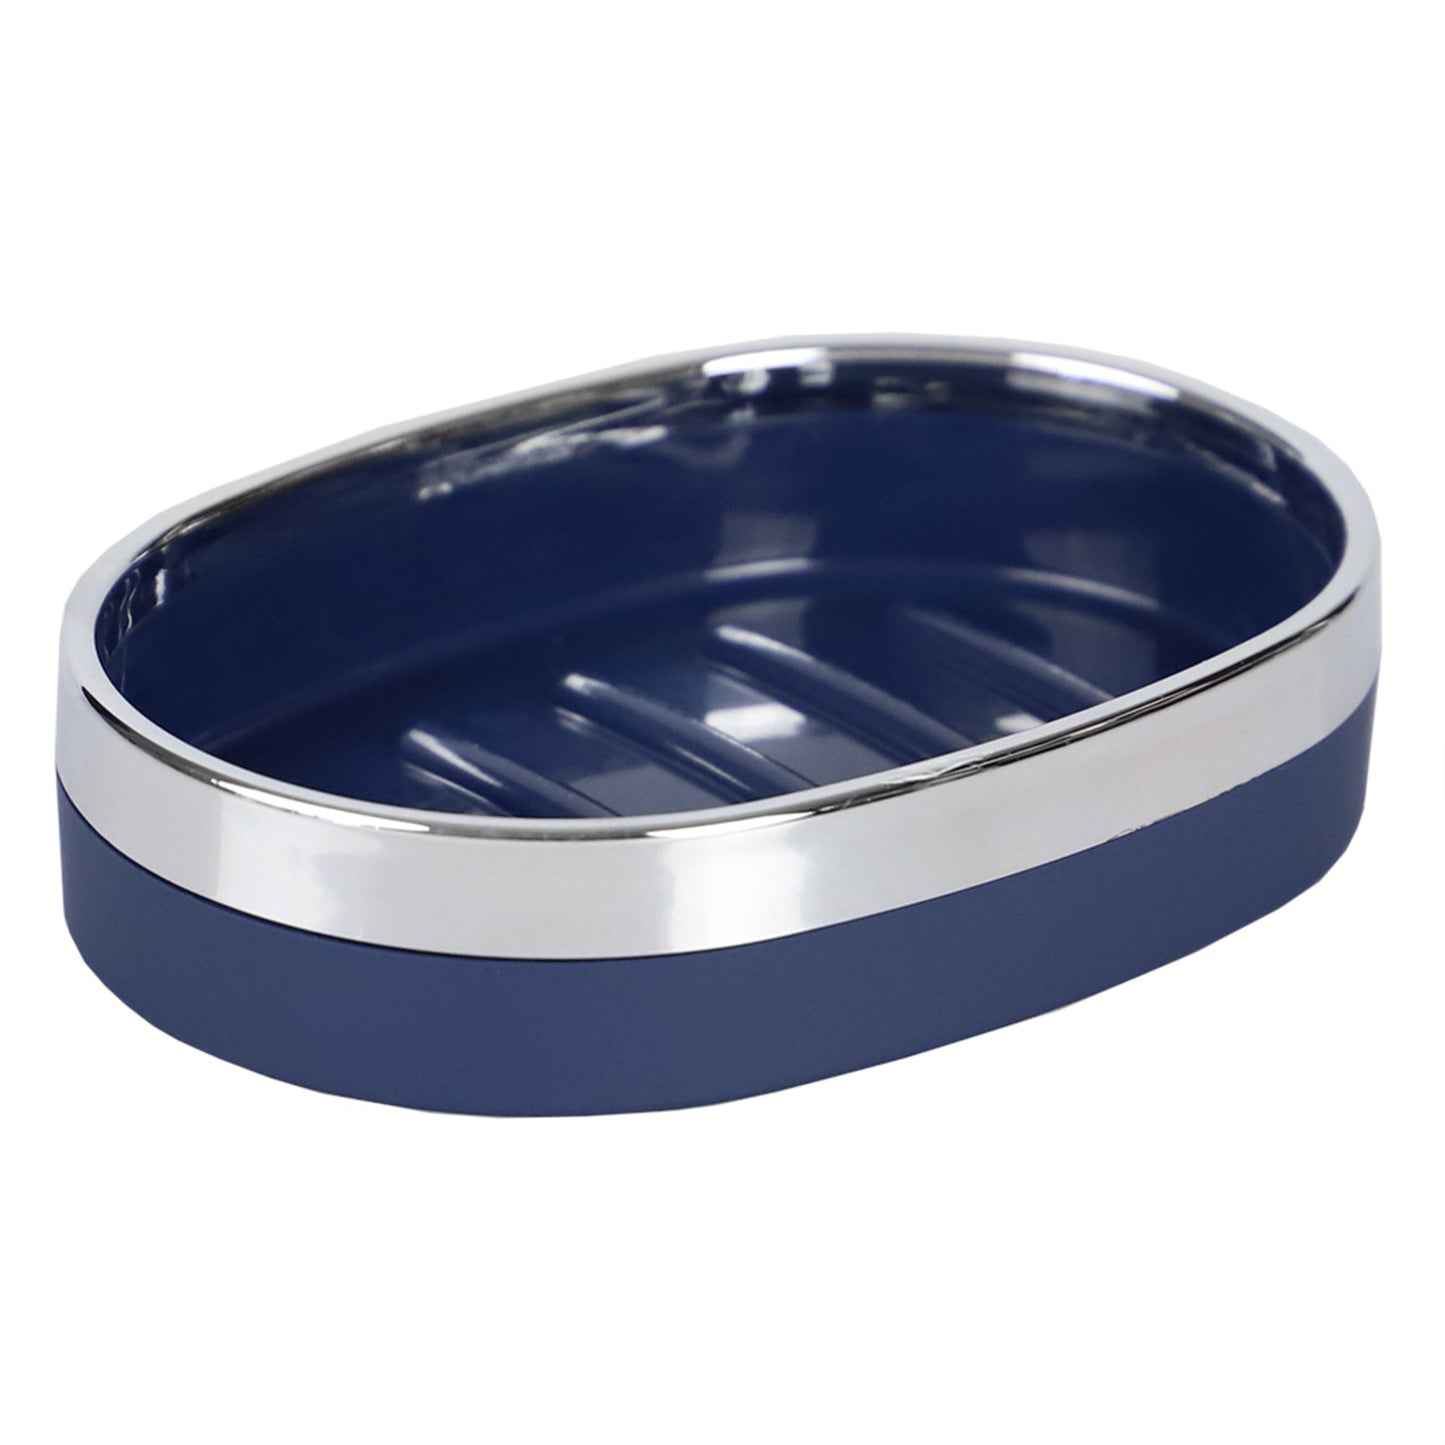 Skylar Oval Ridged ABS Plastic Soap Dish, Navy